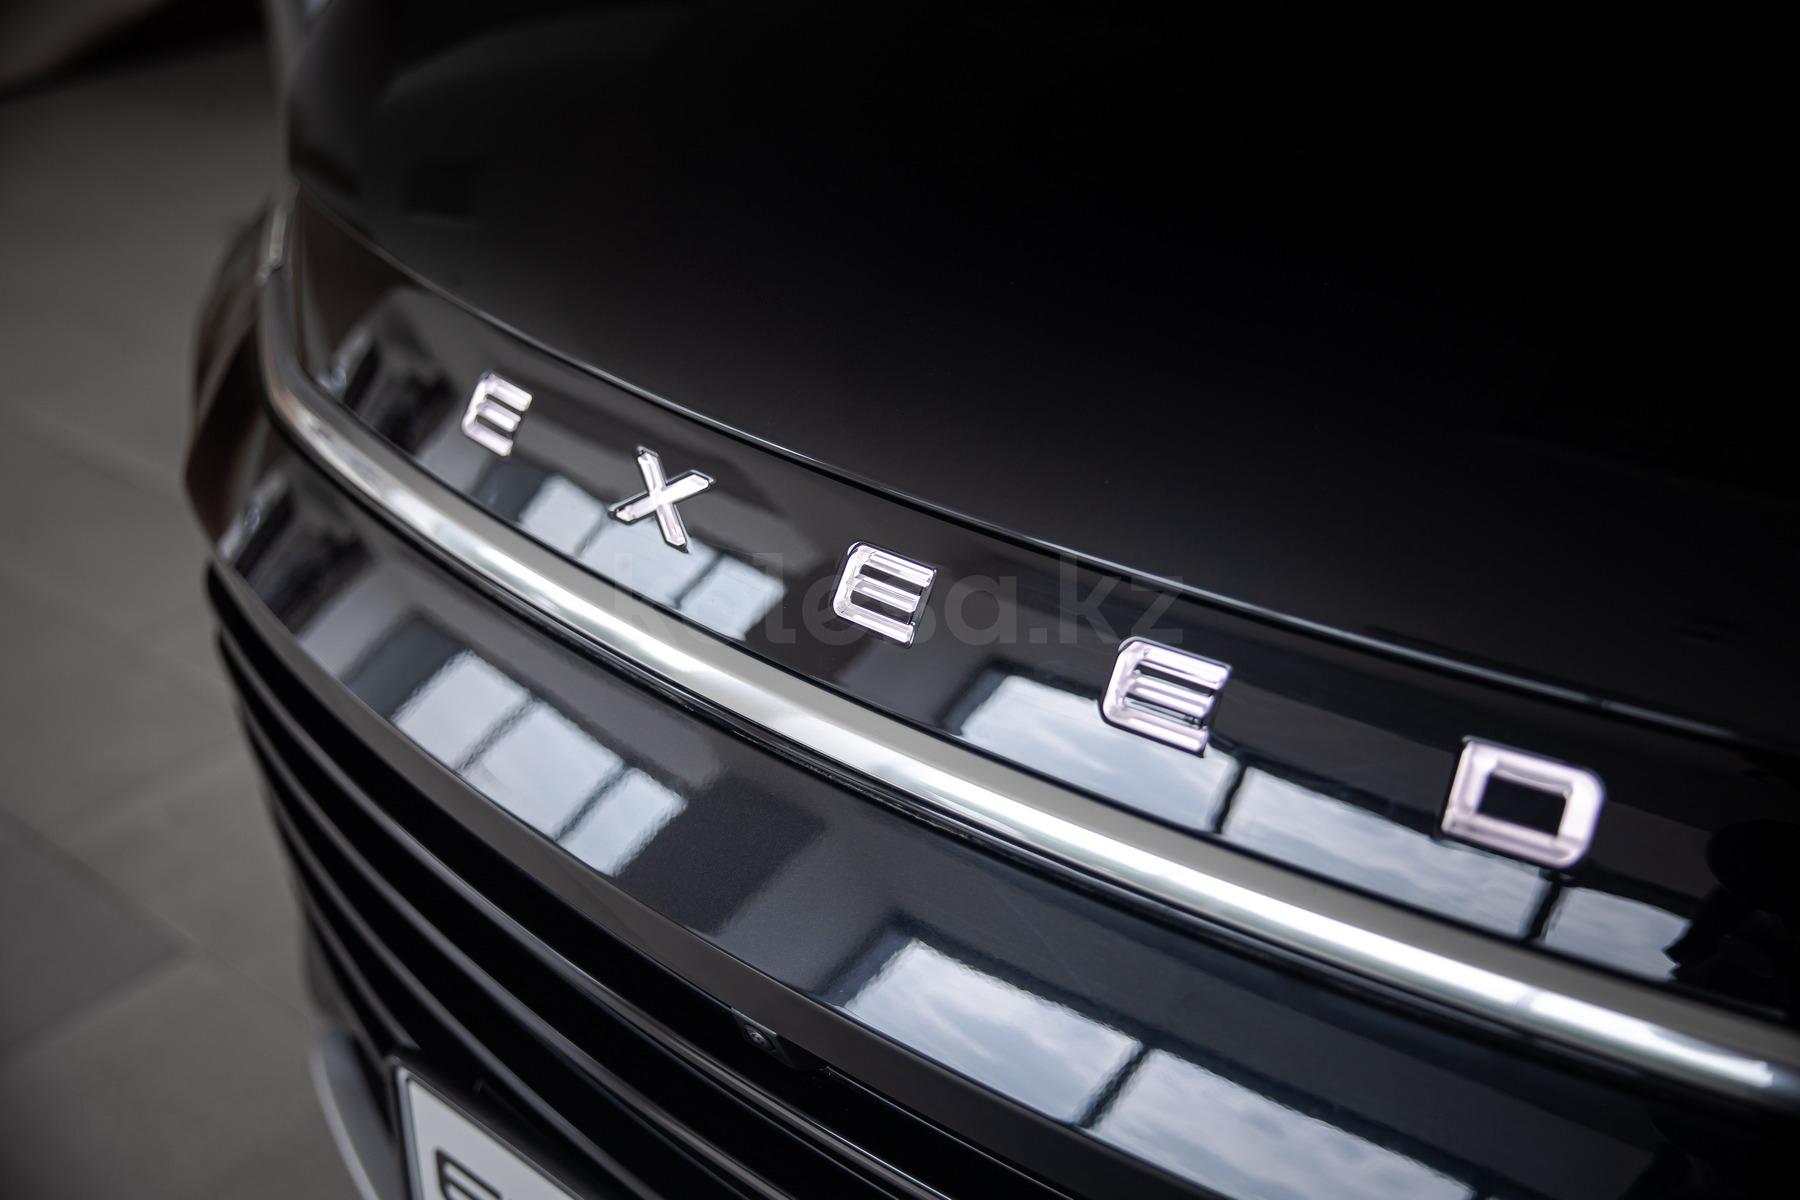 Exeed TXL SUV 2021 - н.в. года от 16 800 000 тенге